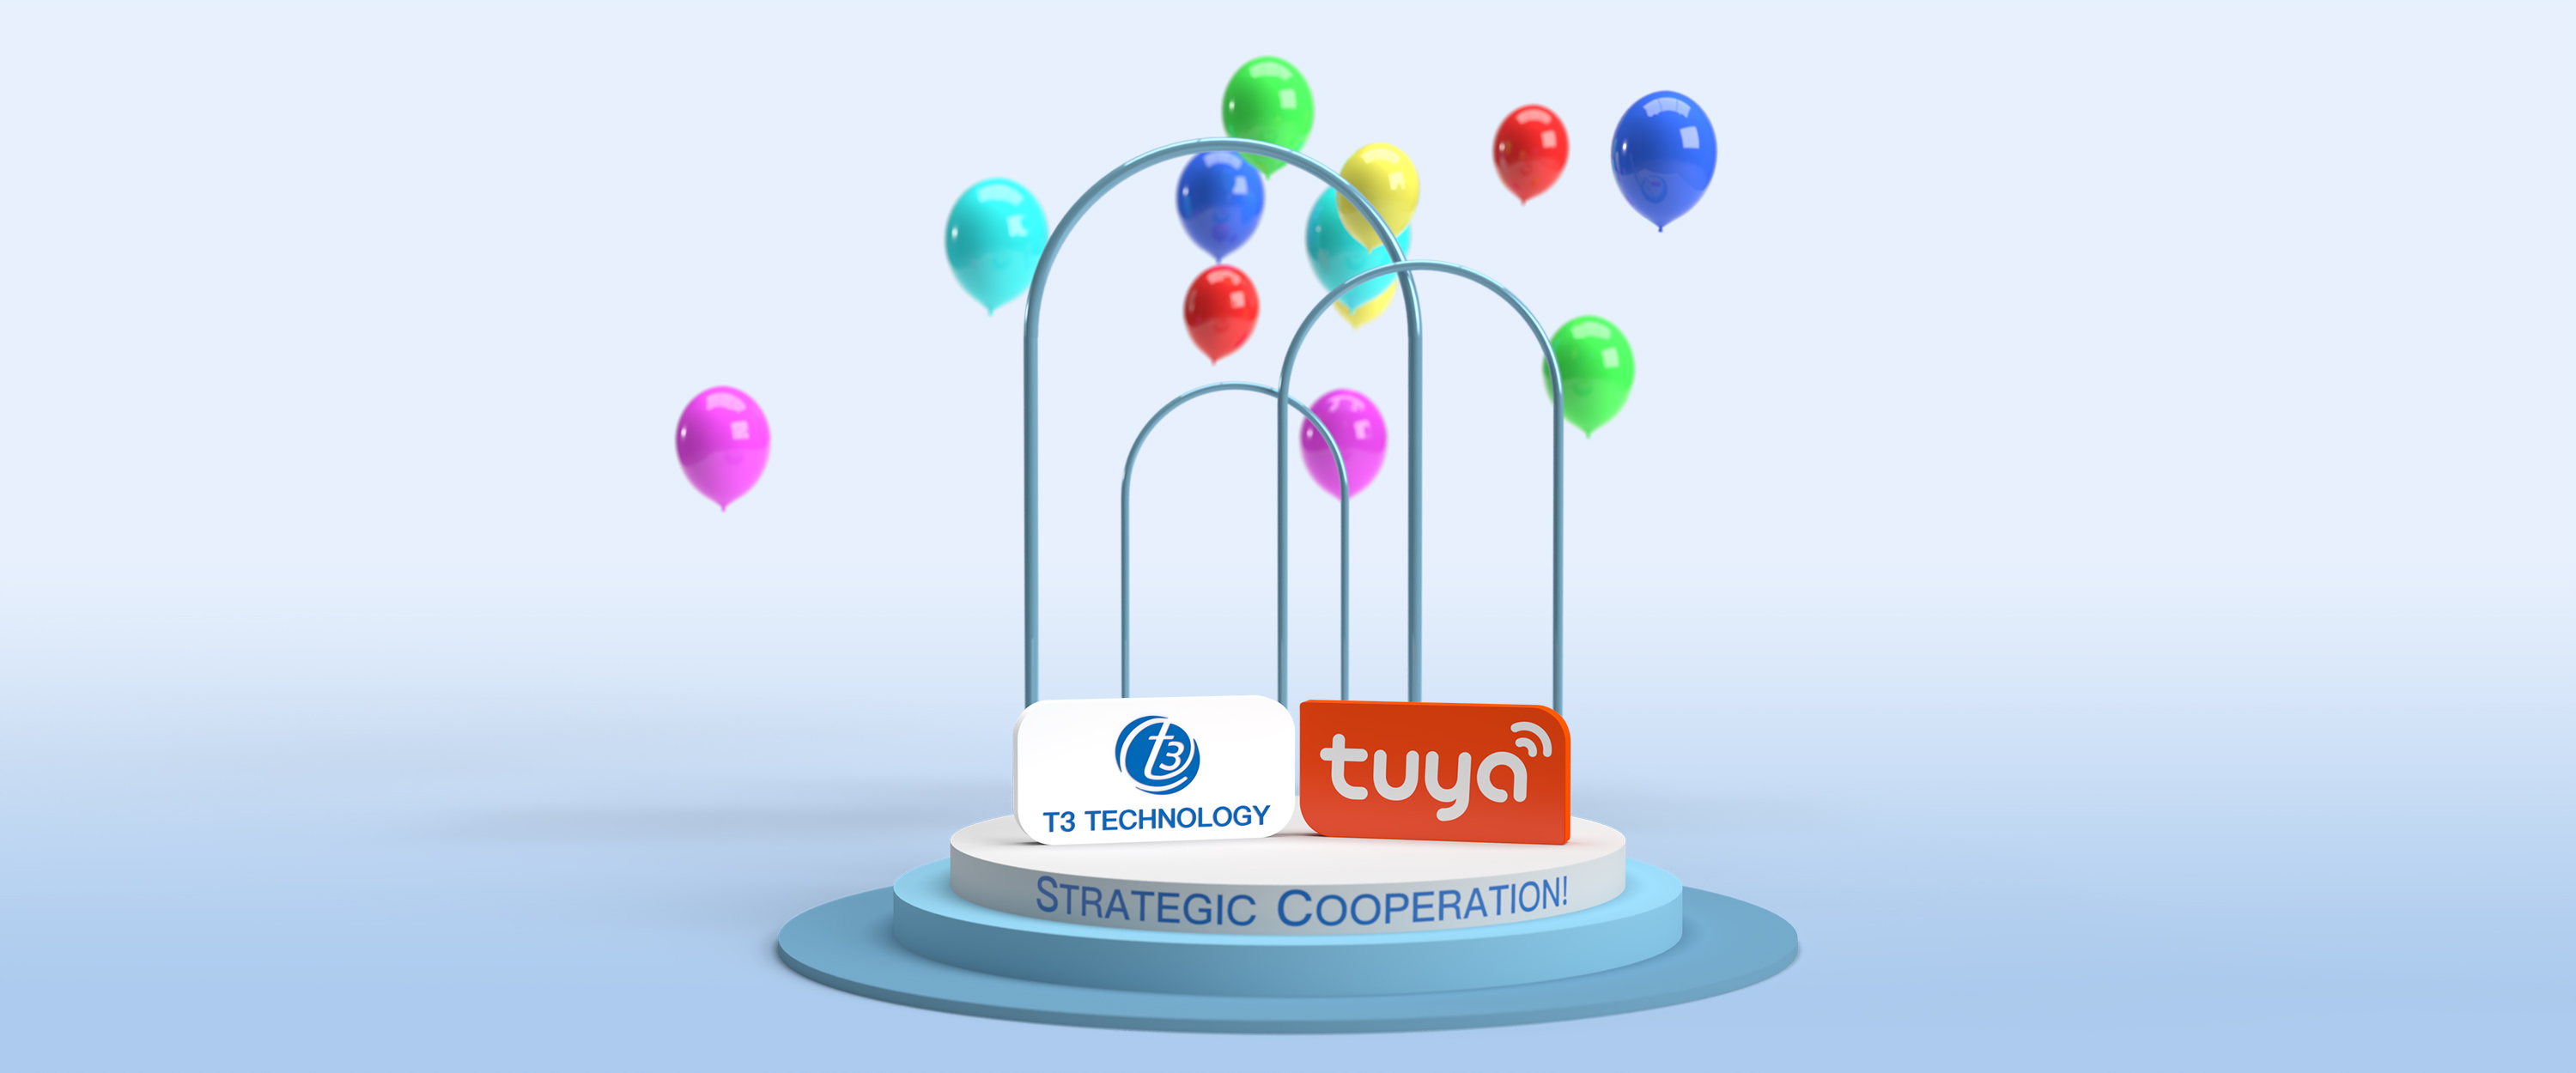 T3 Technology and Tuya Smart Strategic Cooperation